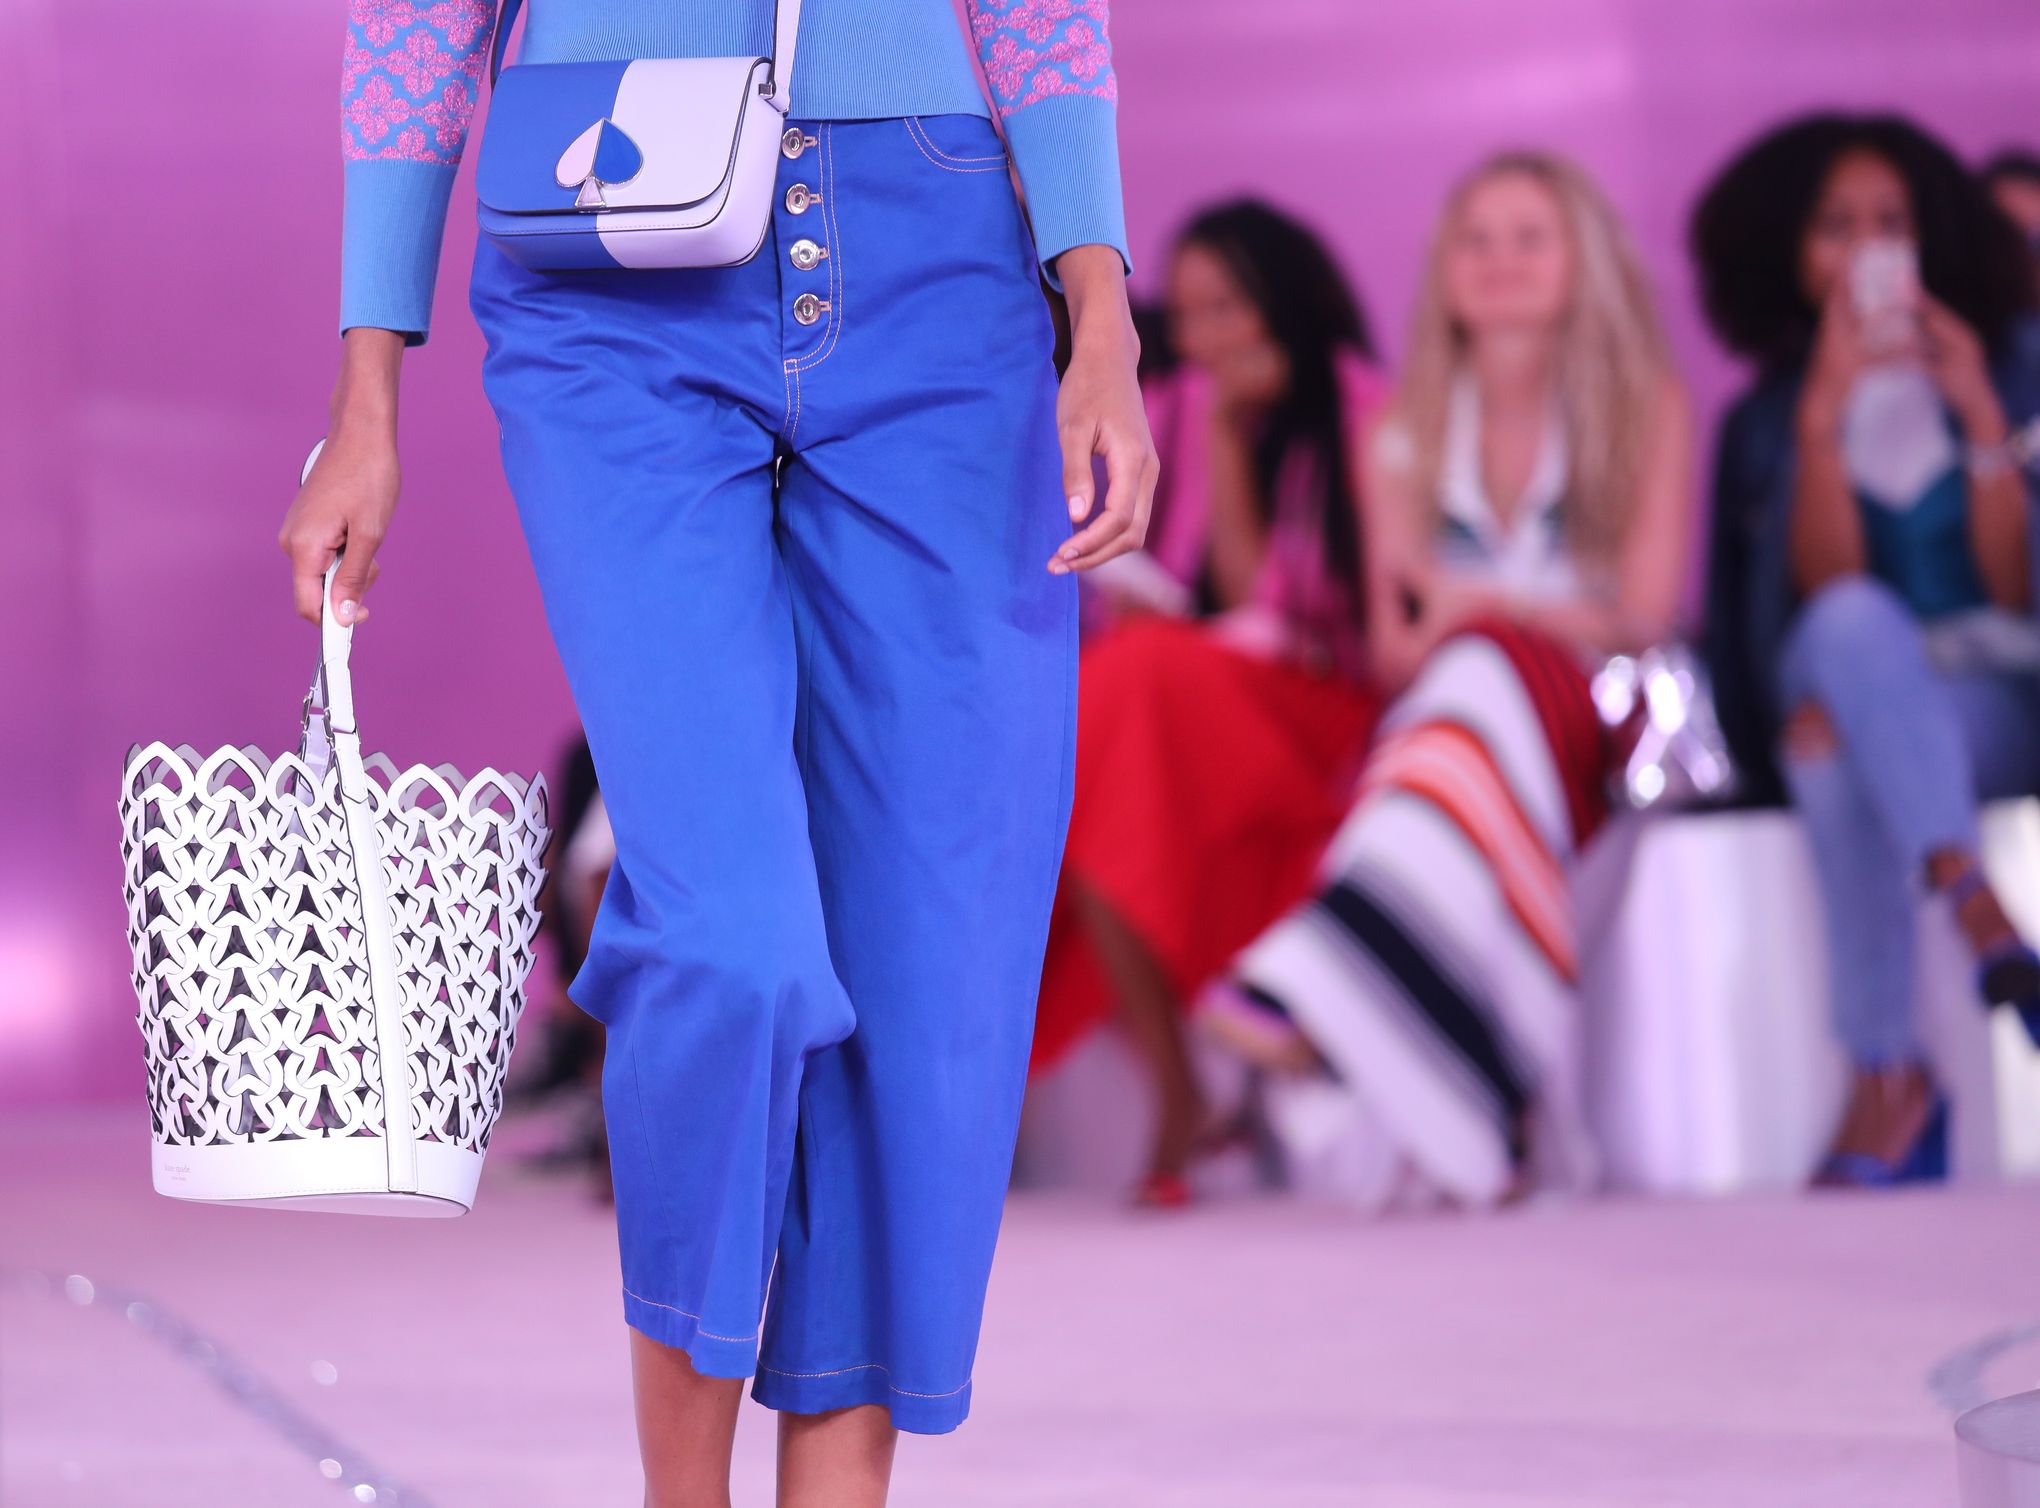 10 Best Kate Spade Purses for 2018 - Stylish Kate Spade Handbags